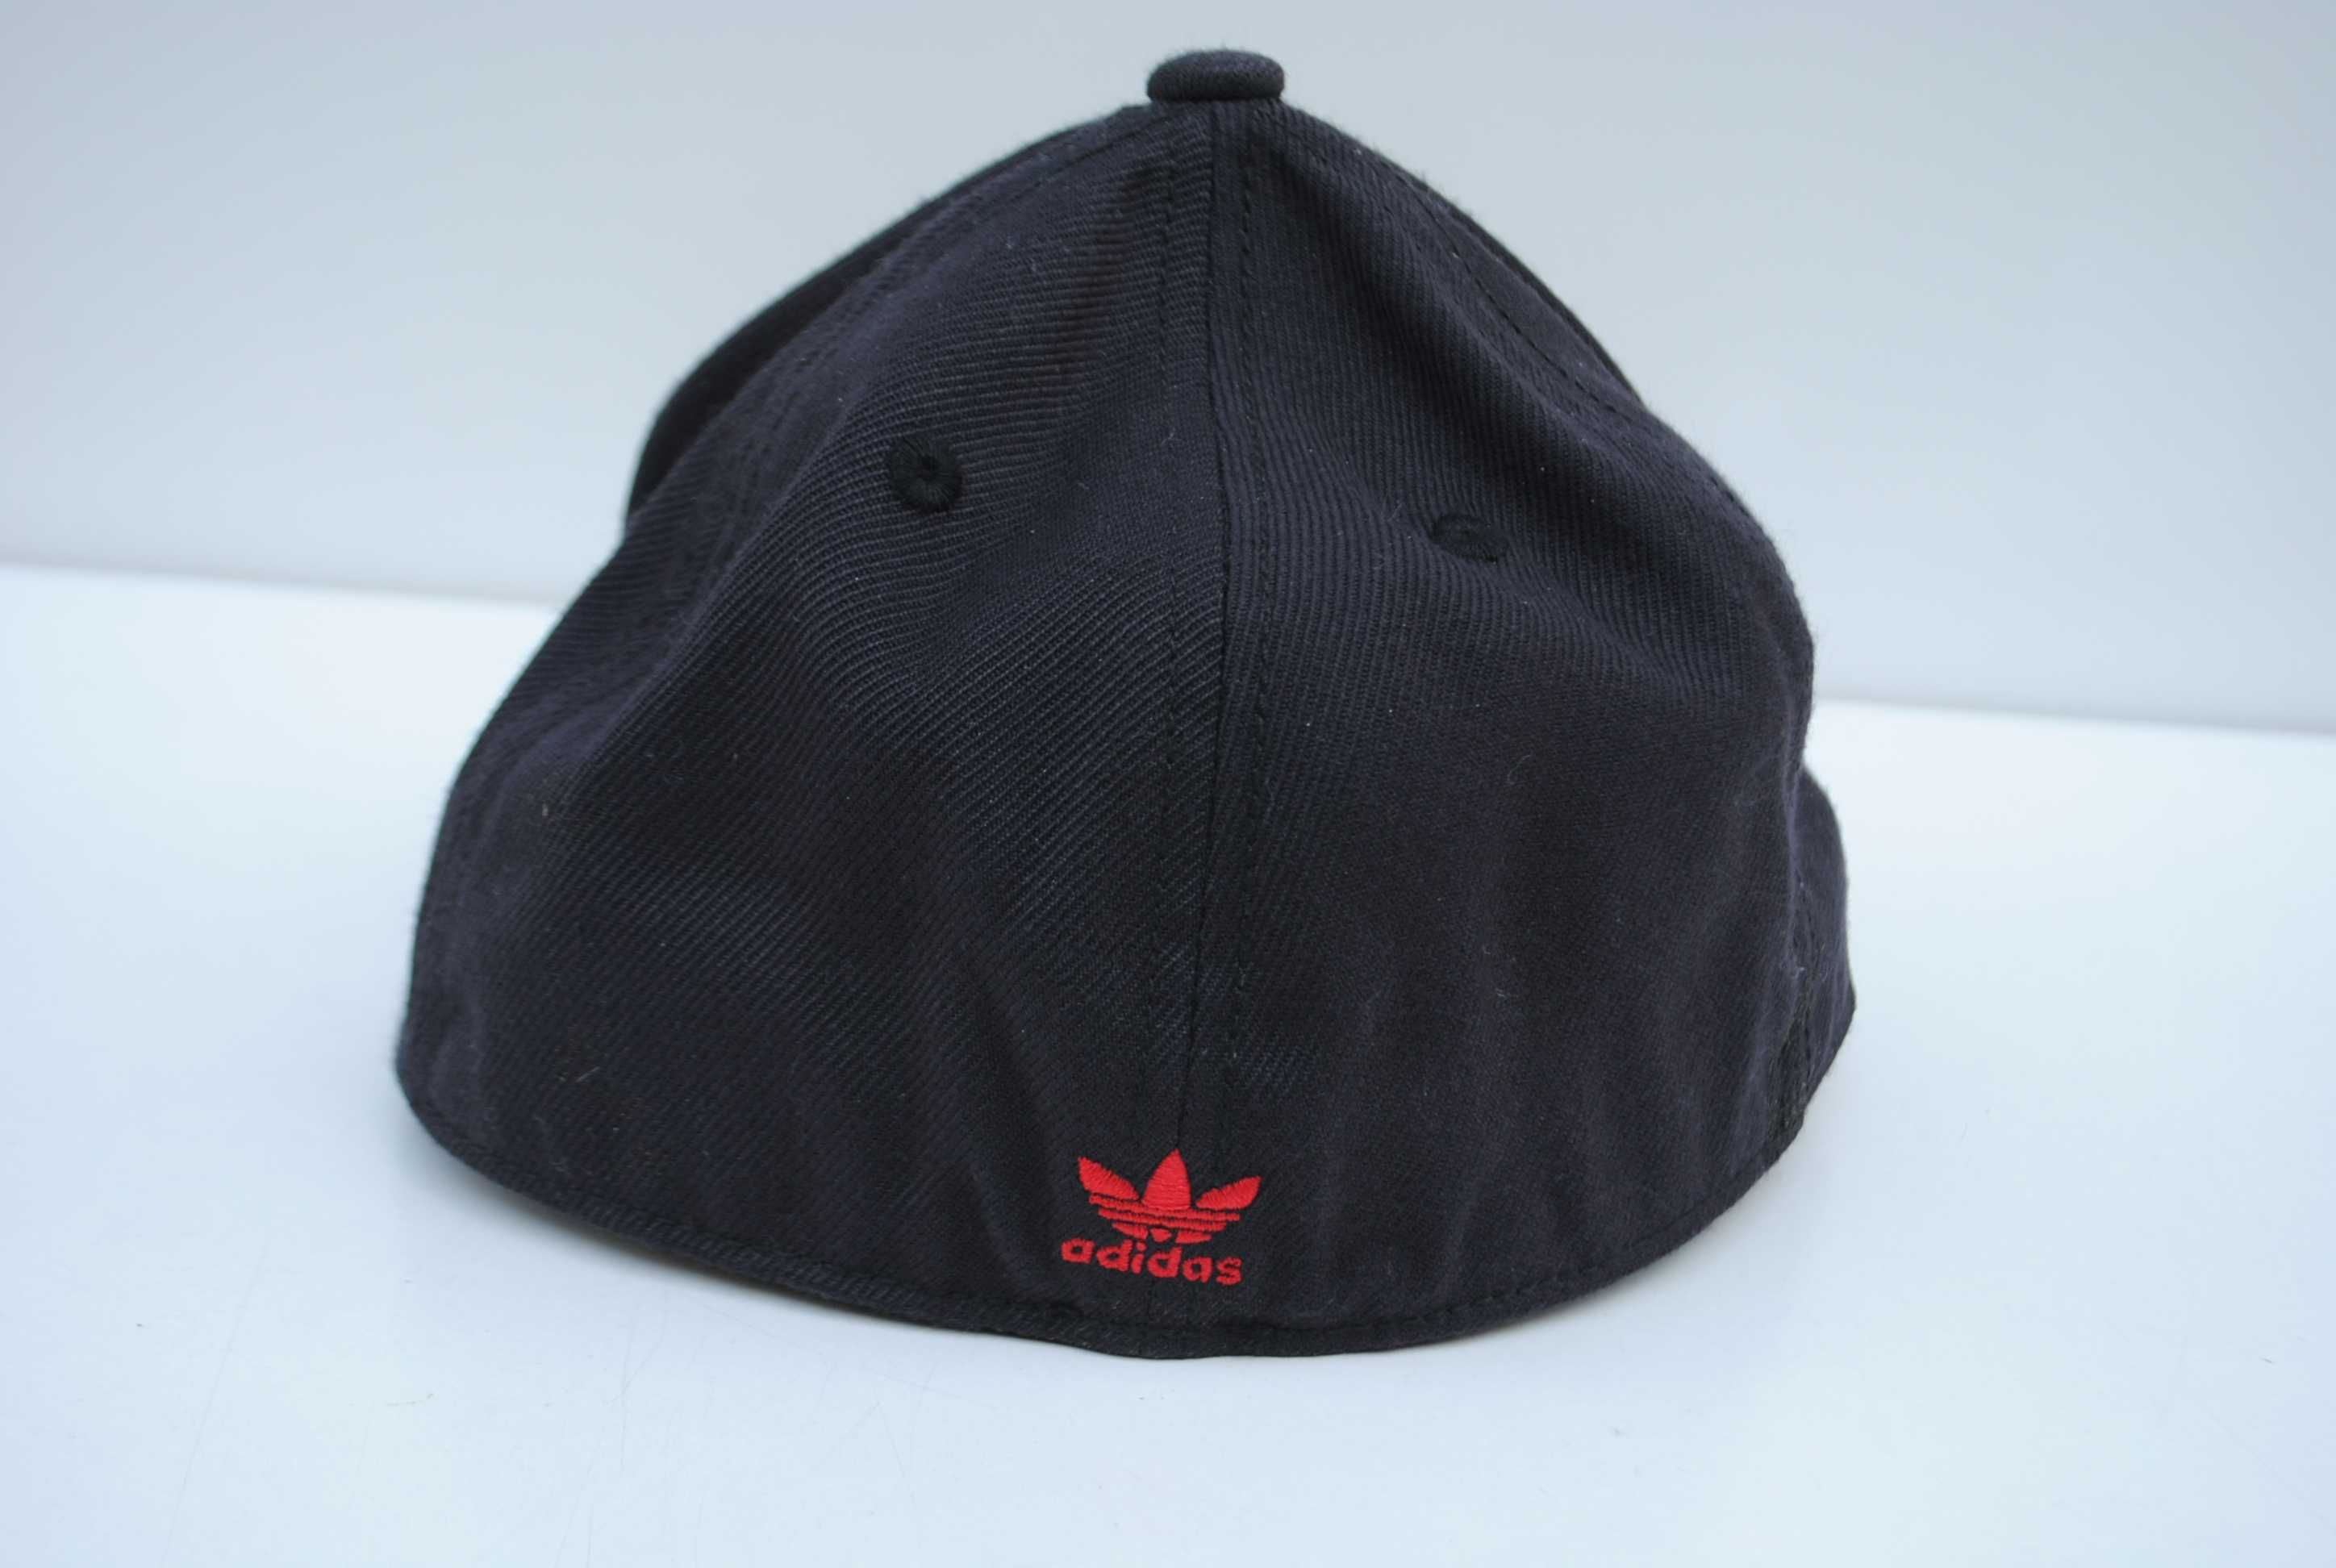 Fullcap czapka z daszkiem ADIDAS ORIGINALS RASTA S